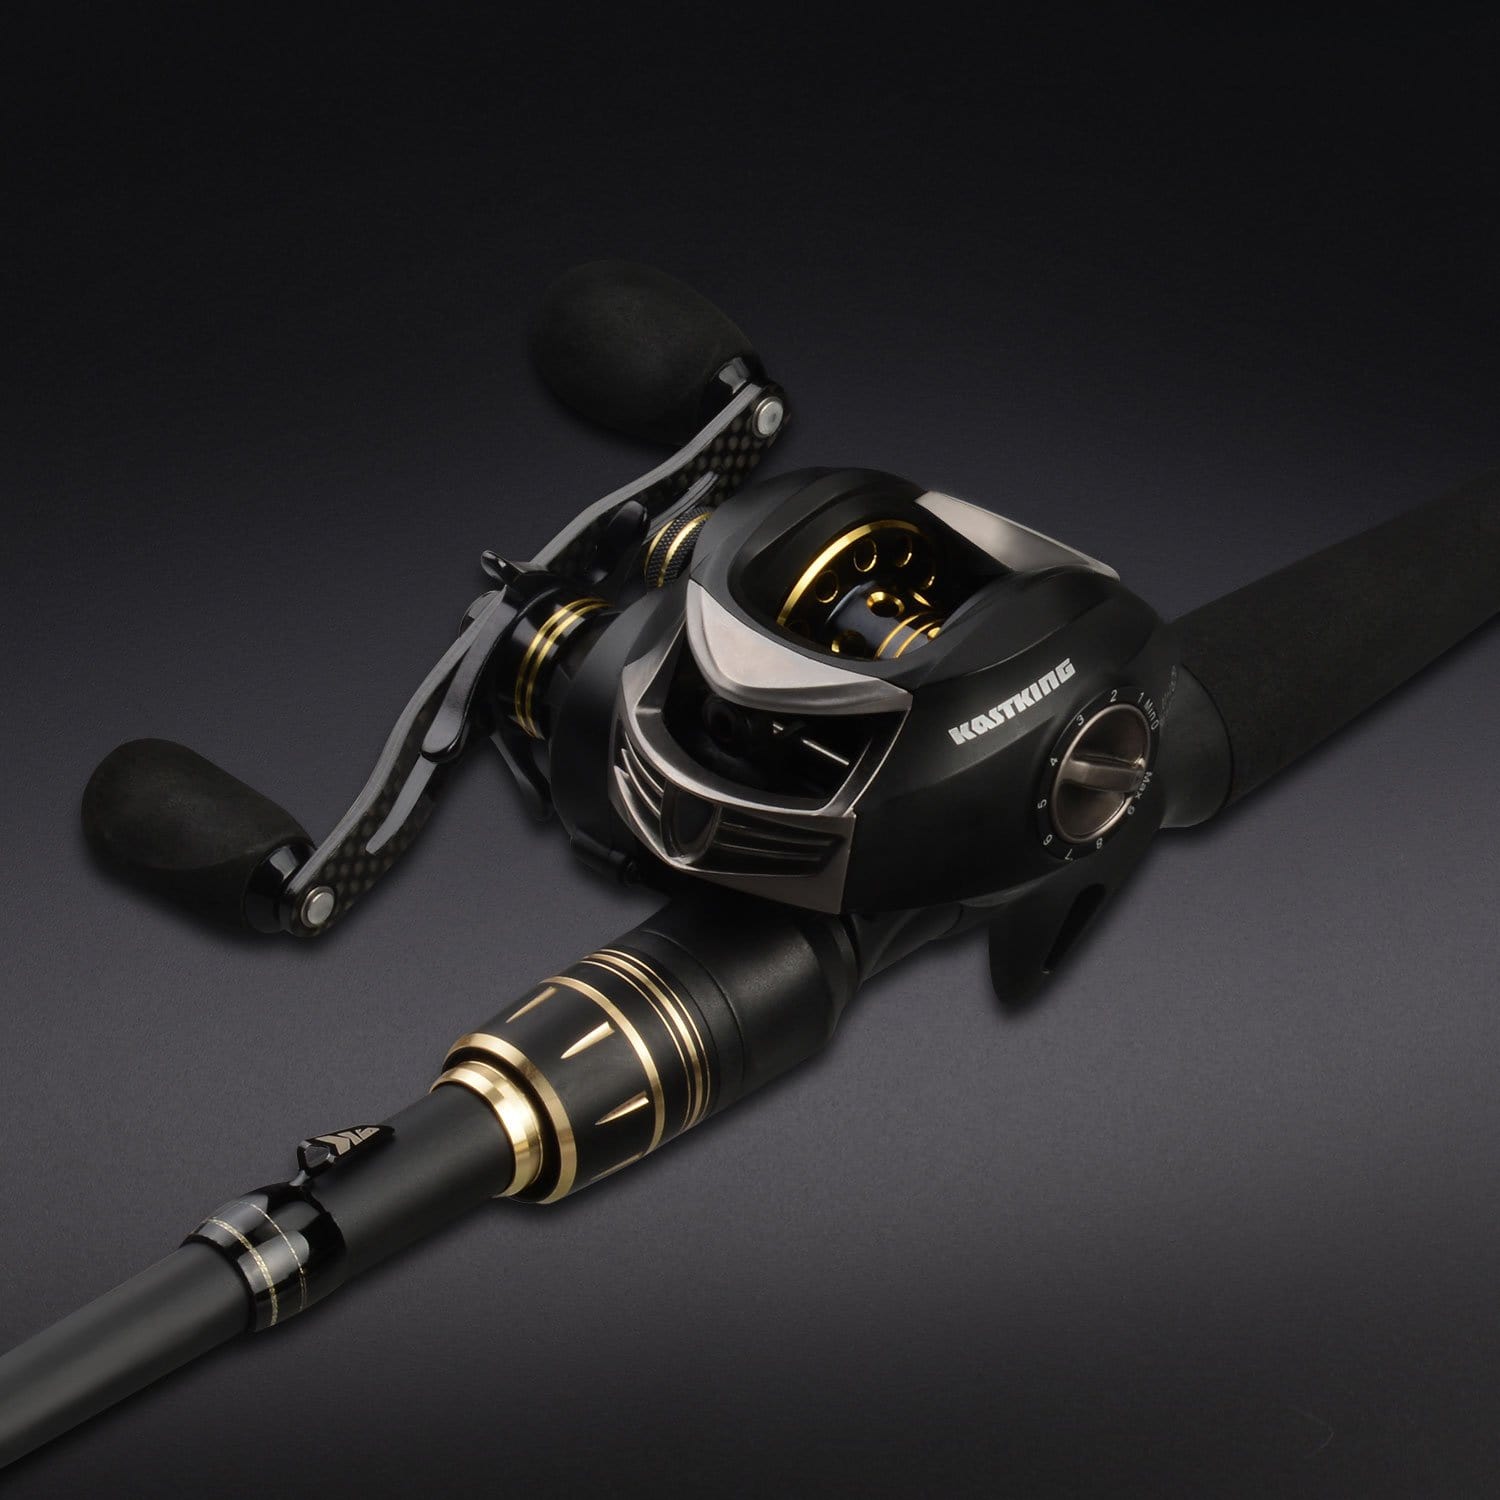 KastKing Blackhawk II Telescopic Fishing Rods